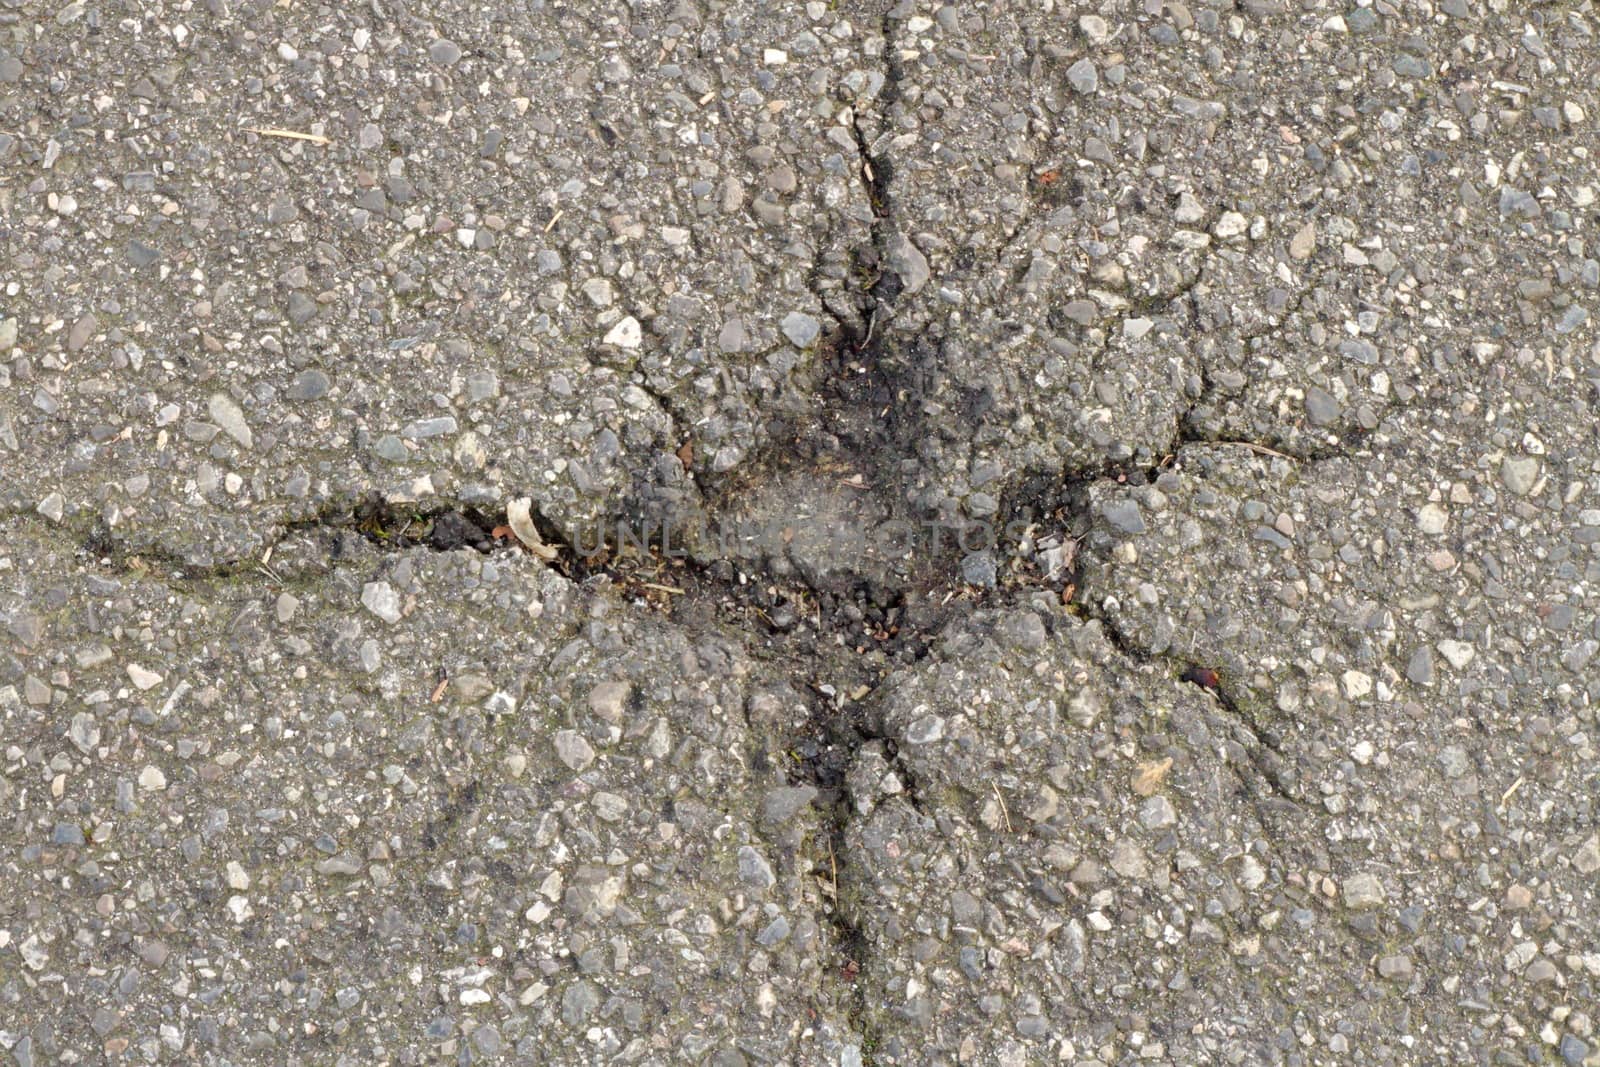 Small tar hole like a star in pavement asphalt